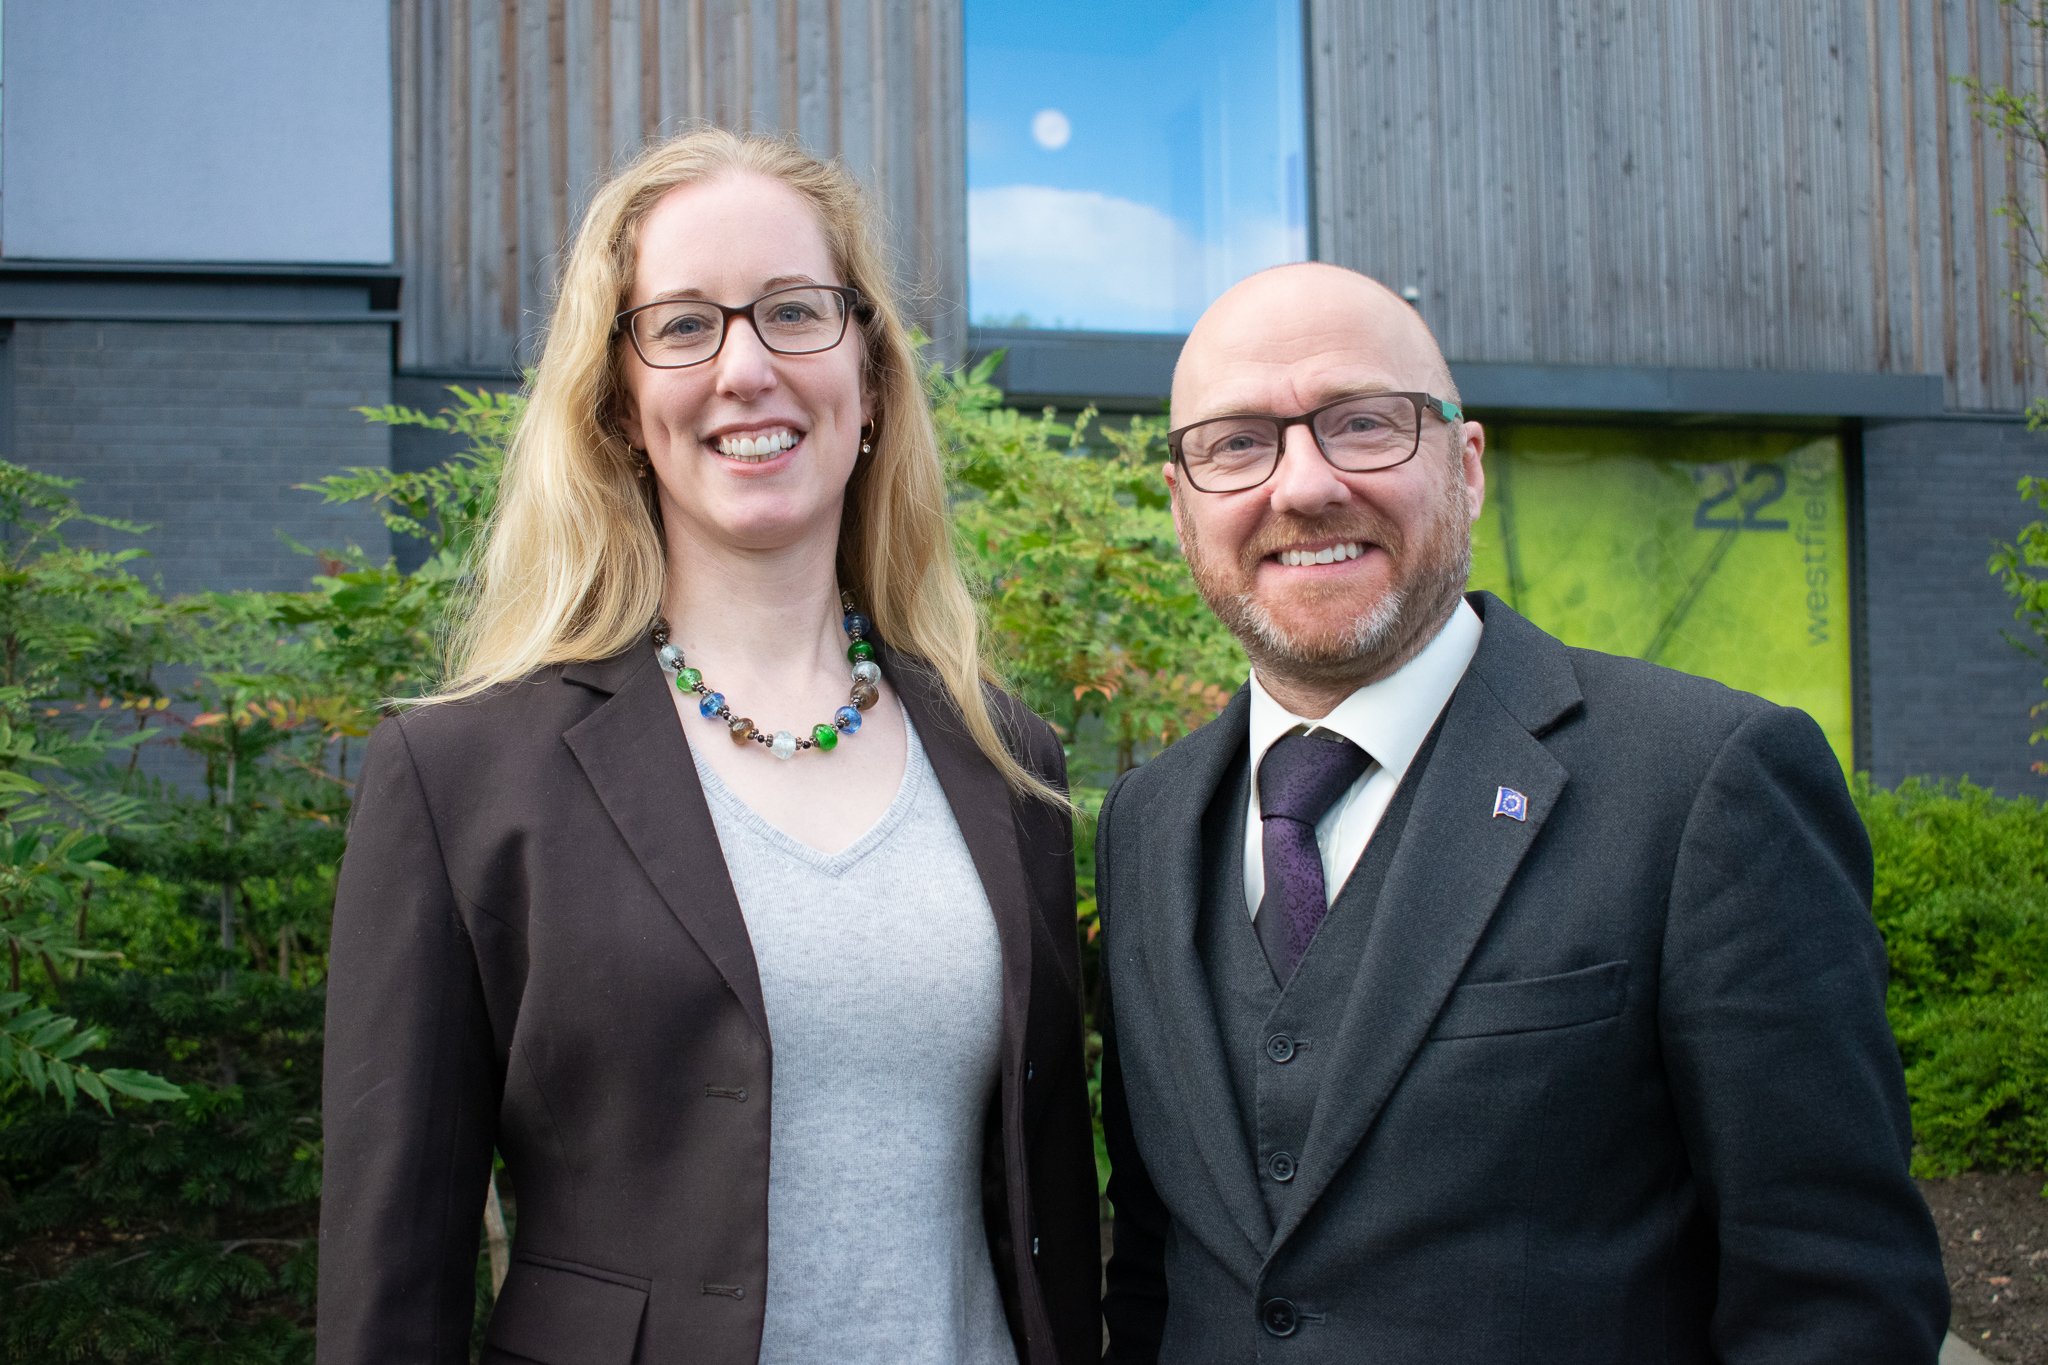 Scottish Greens co-leaders Lorna Slater and Patrick Harvie